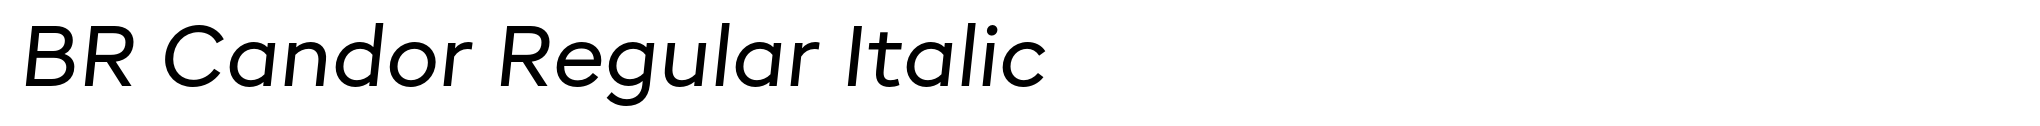 BR Candor Regular Italic image